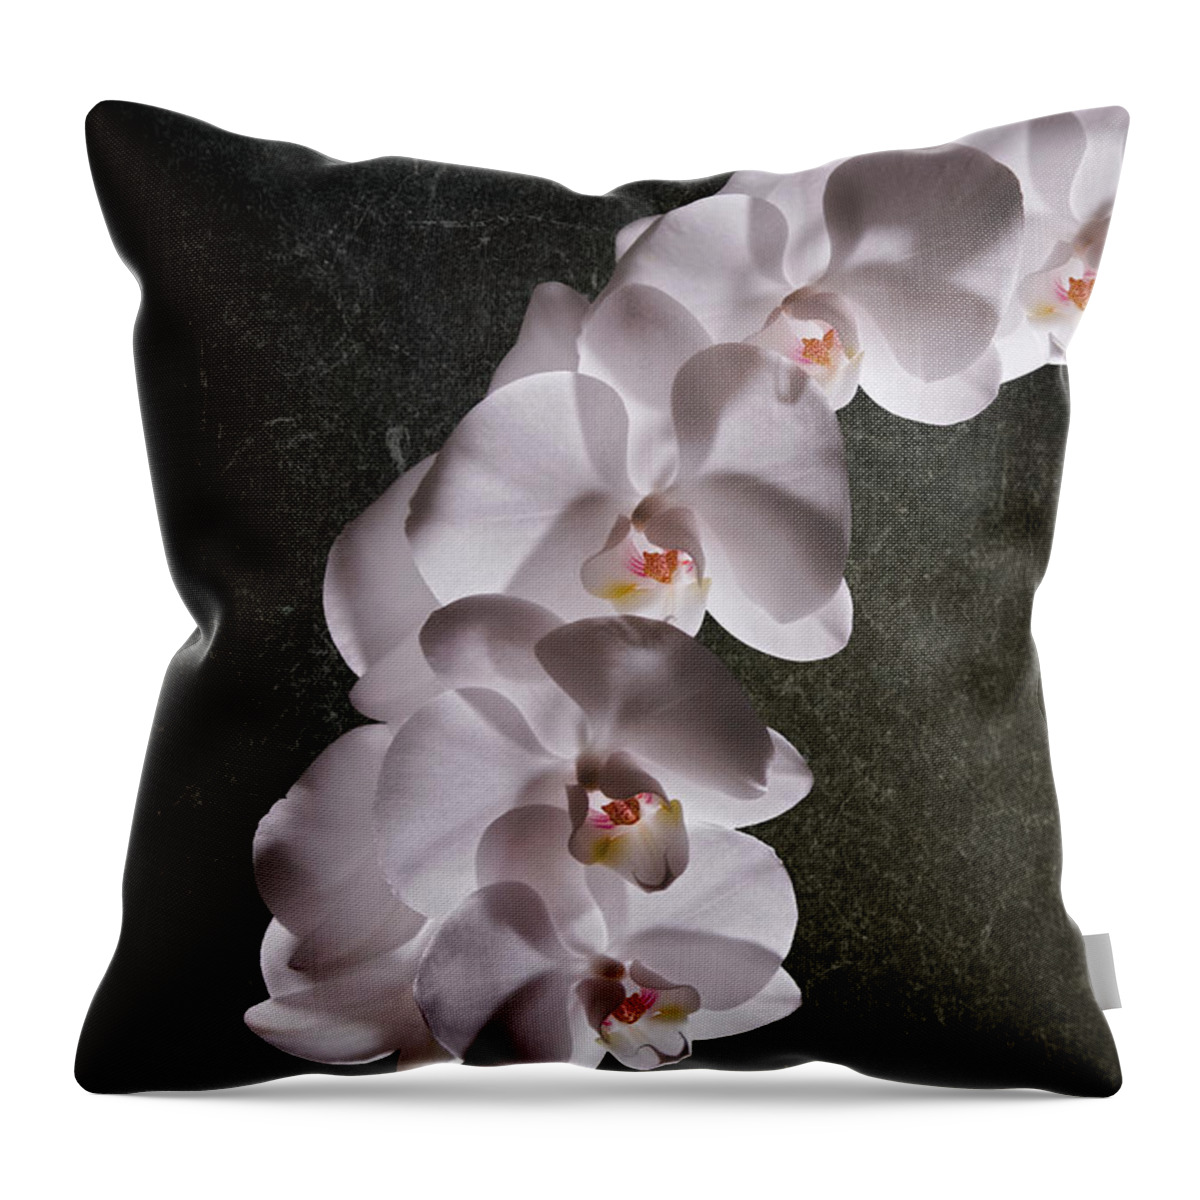 Arrangement Throw Pillow featuring the photograph White Orchid Still Life by Tom Mc Nemar